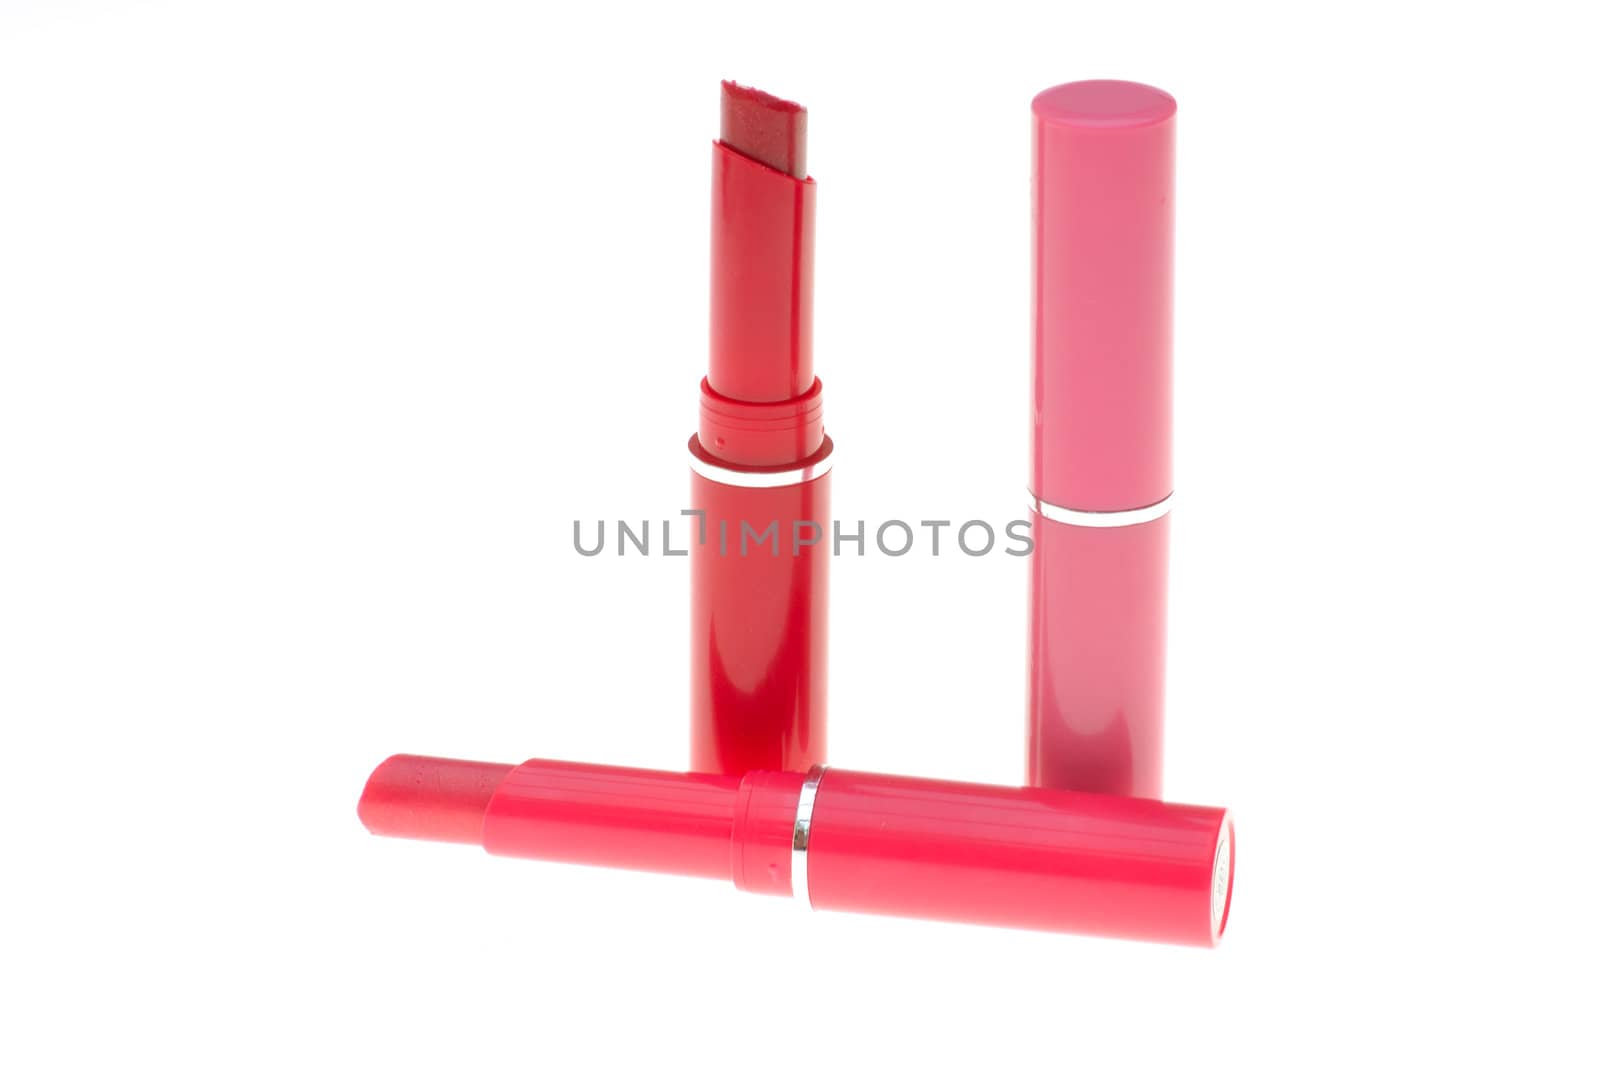 Lipsticks by pauws99